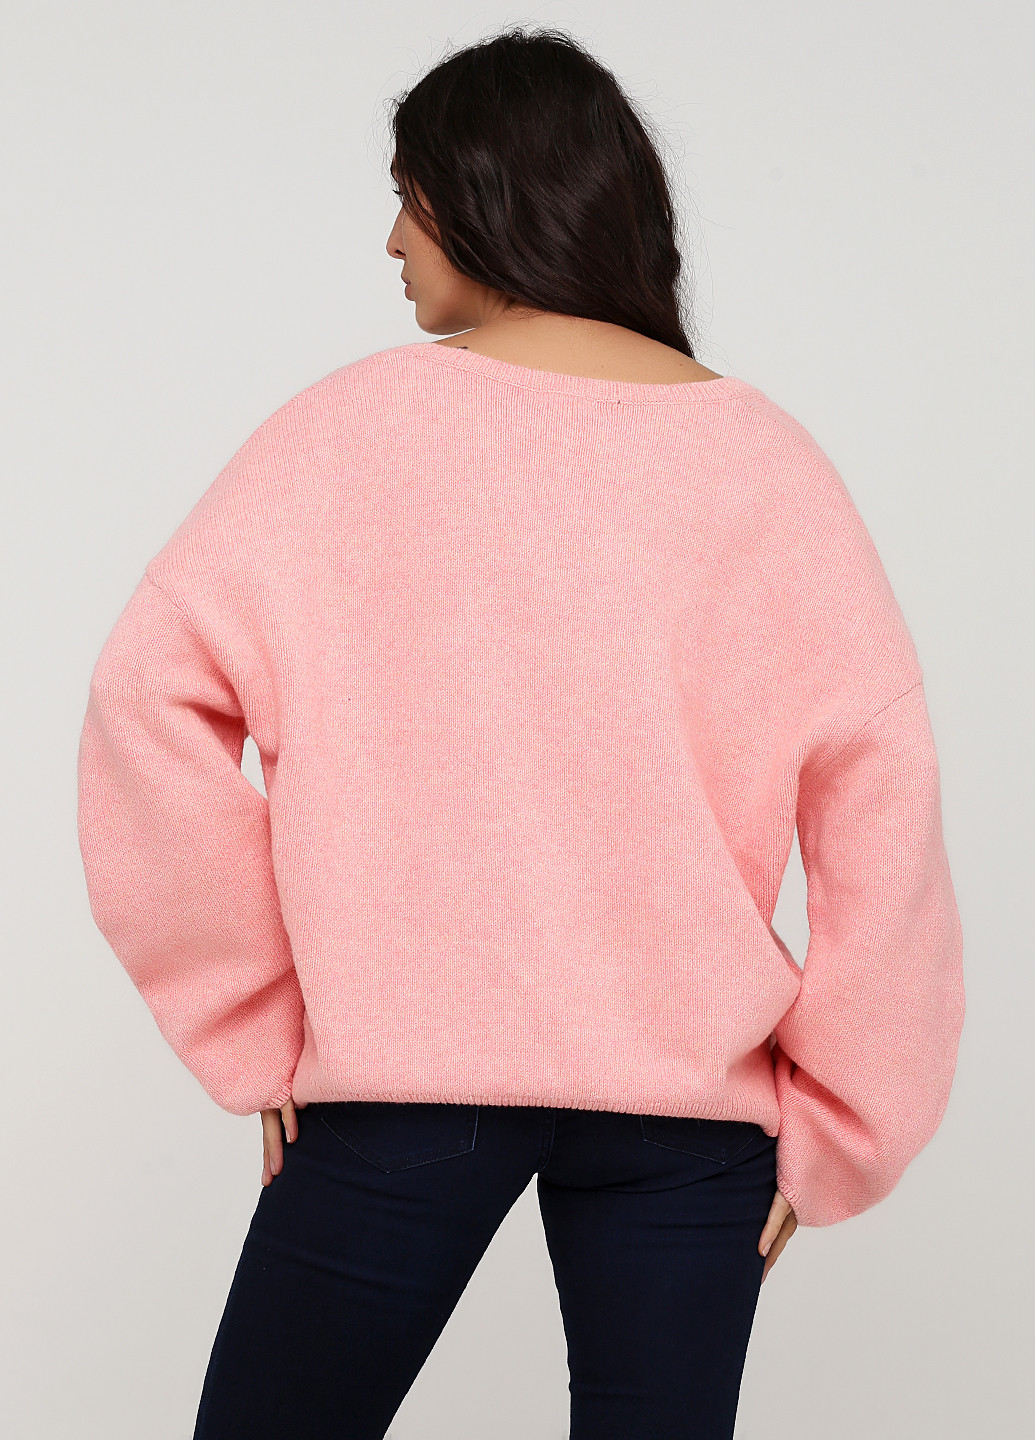 Розовый демисезонный пуловер пуловер MTWTFSS Weekday